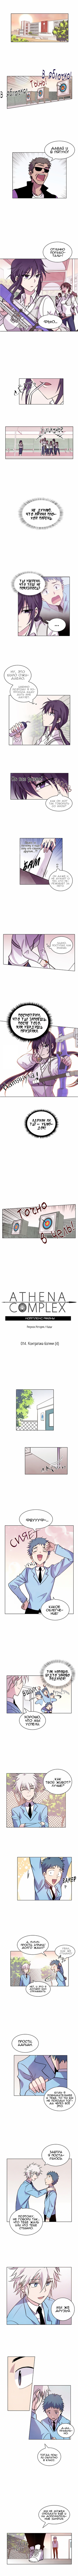 Комплекс Афины 1 - 14 Контратака богини (4)